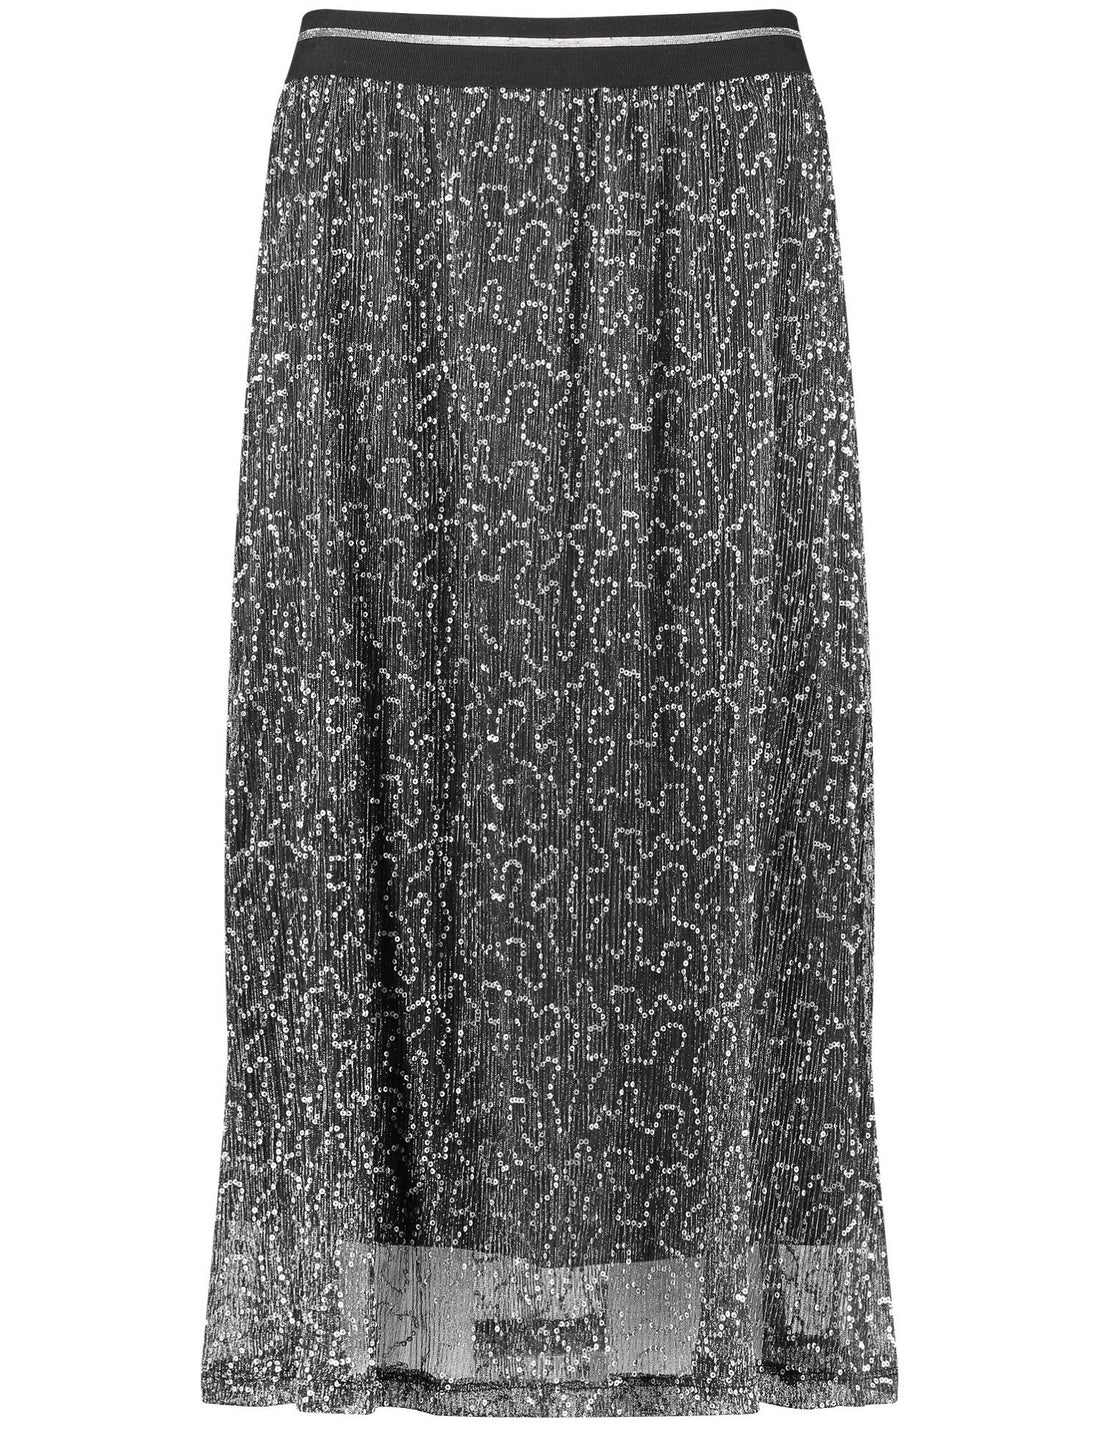 Midi Skirt With Sequin Embellishment_411401-16325_2250_02